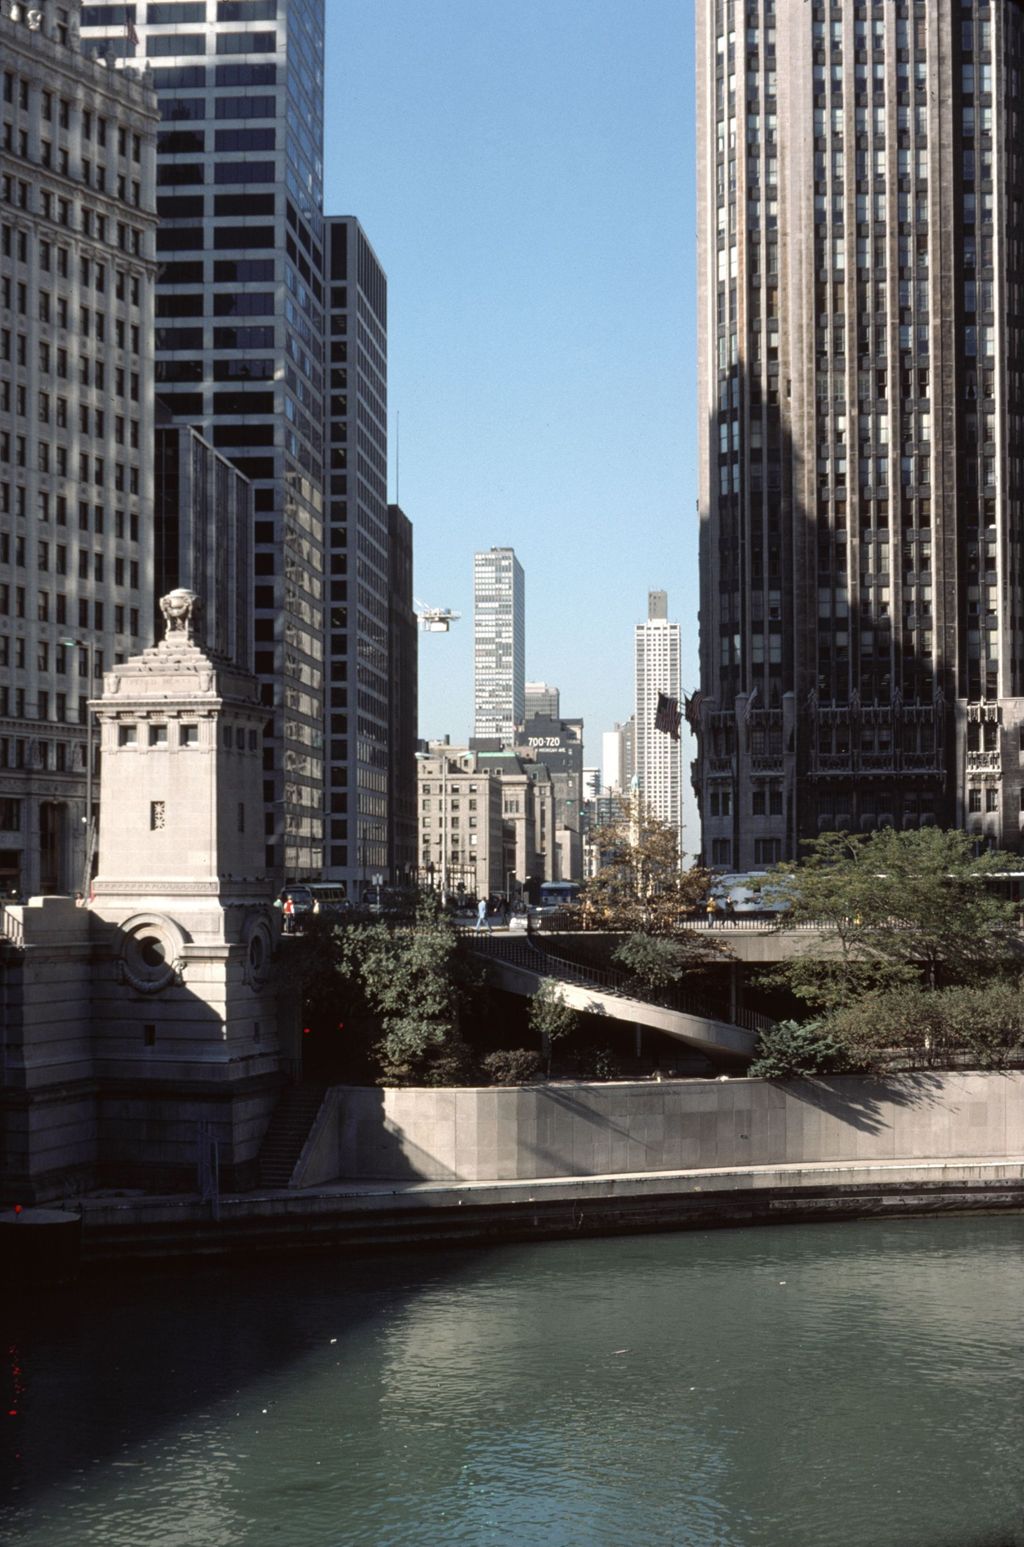 Miniature of Chicago River and North Michigan Avenue